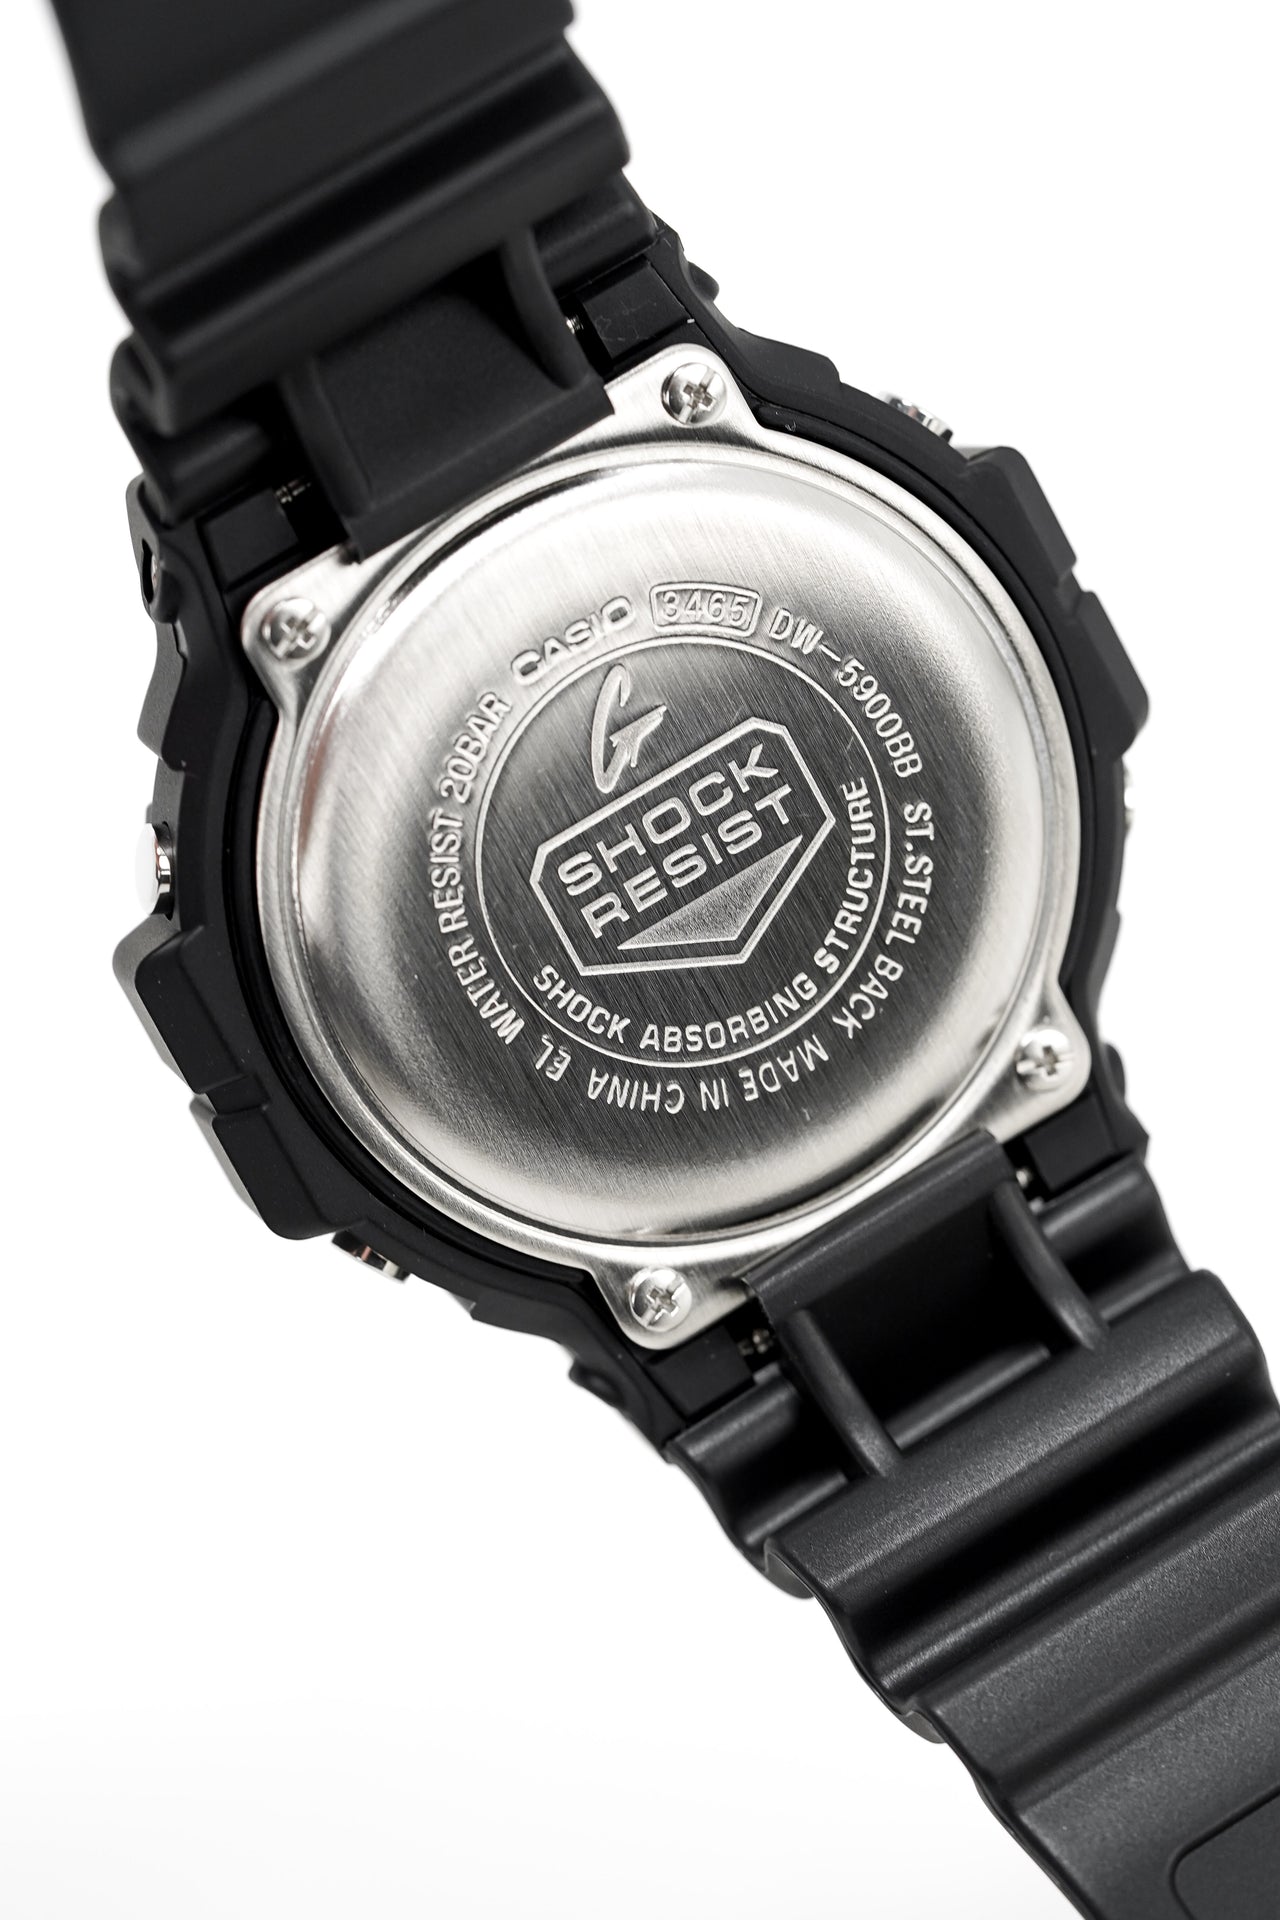 Casio G-Shock Watch Men's "Three Eyes" Classic Basic Black DW-5900BB-1DR